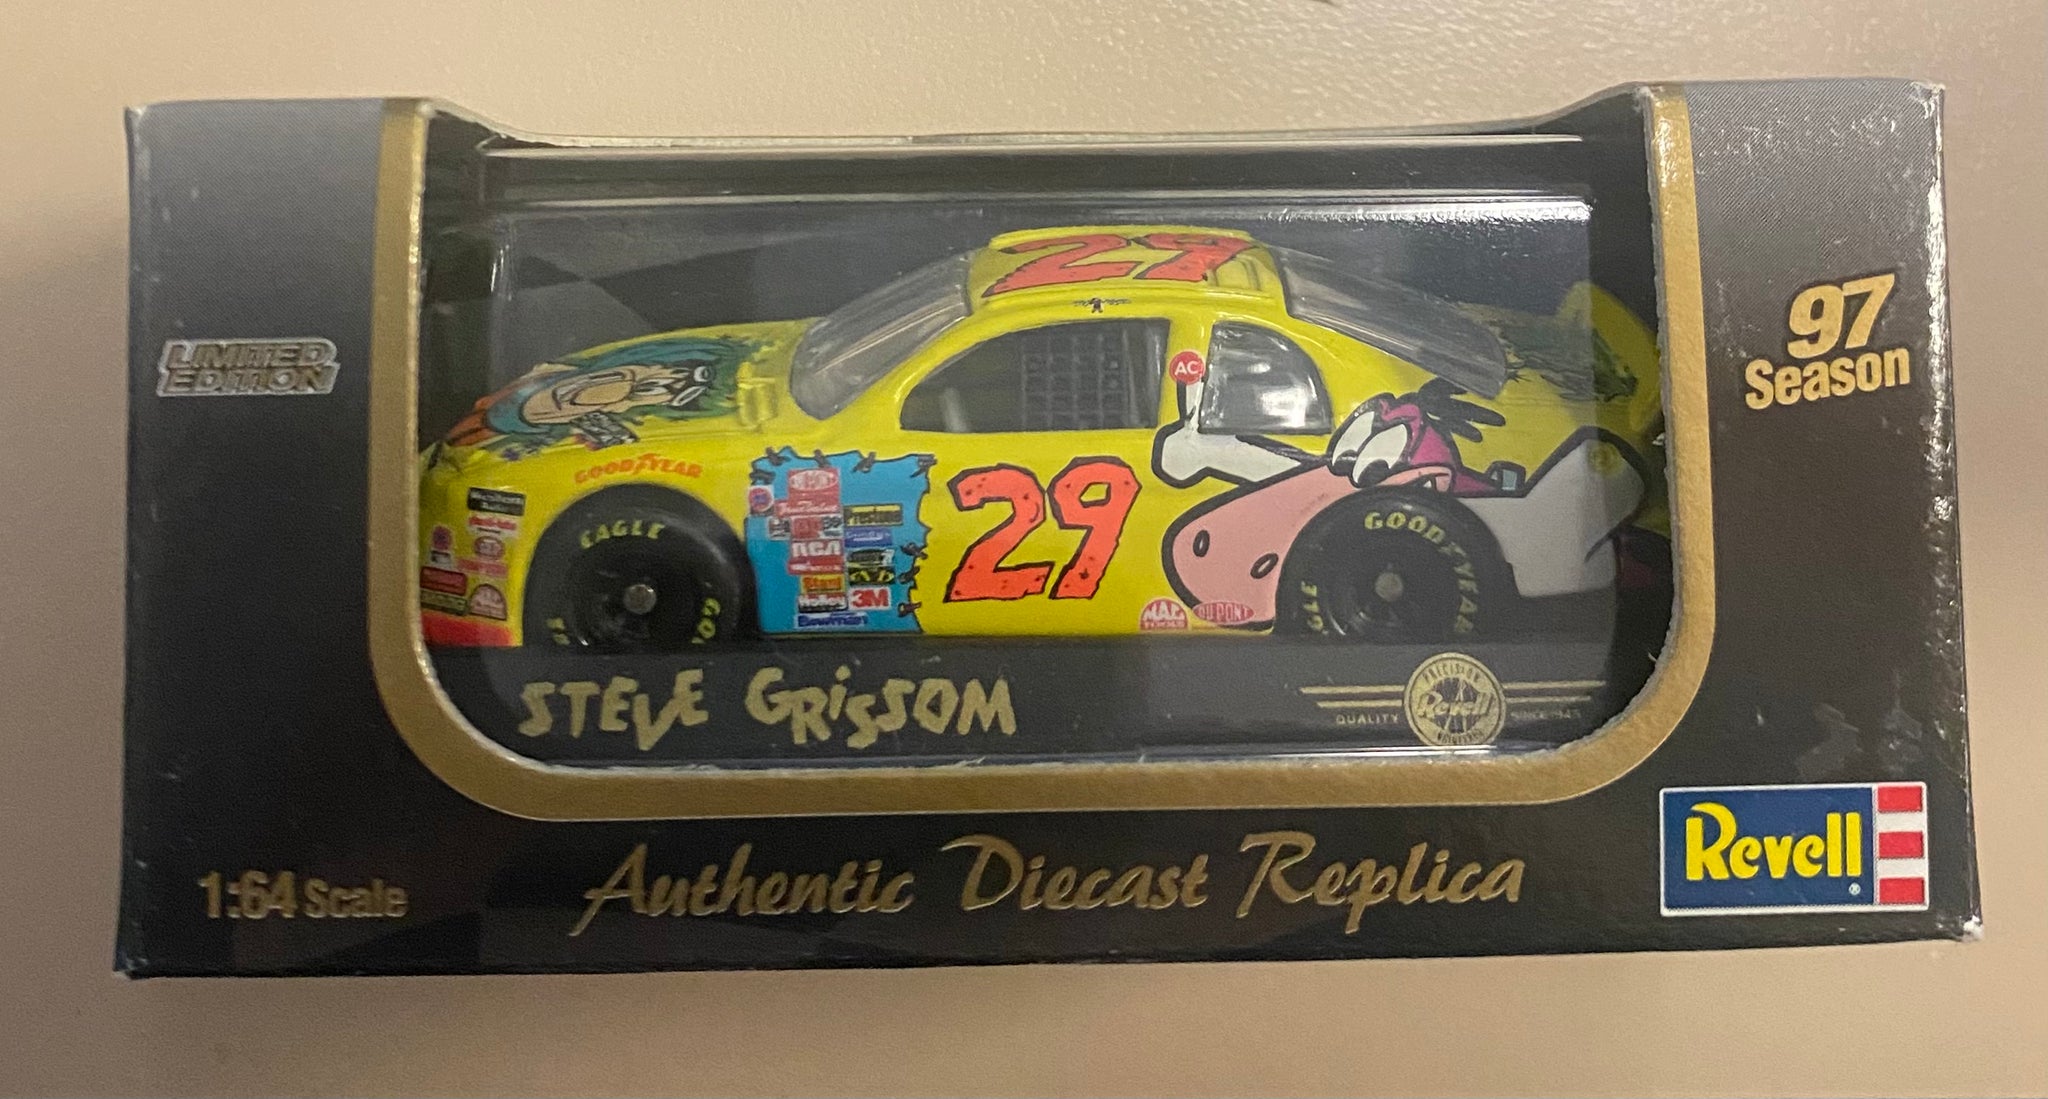 The Flintstones - Revell Racing 97 Edition #29 Race Stock Car 1/64 Steve Grissom